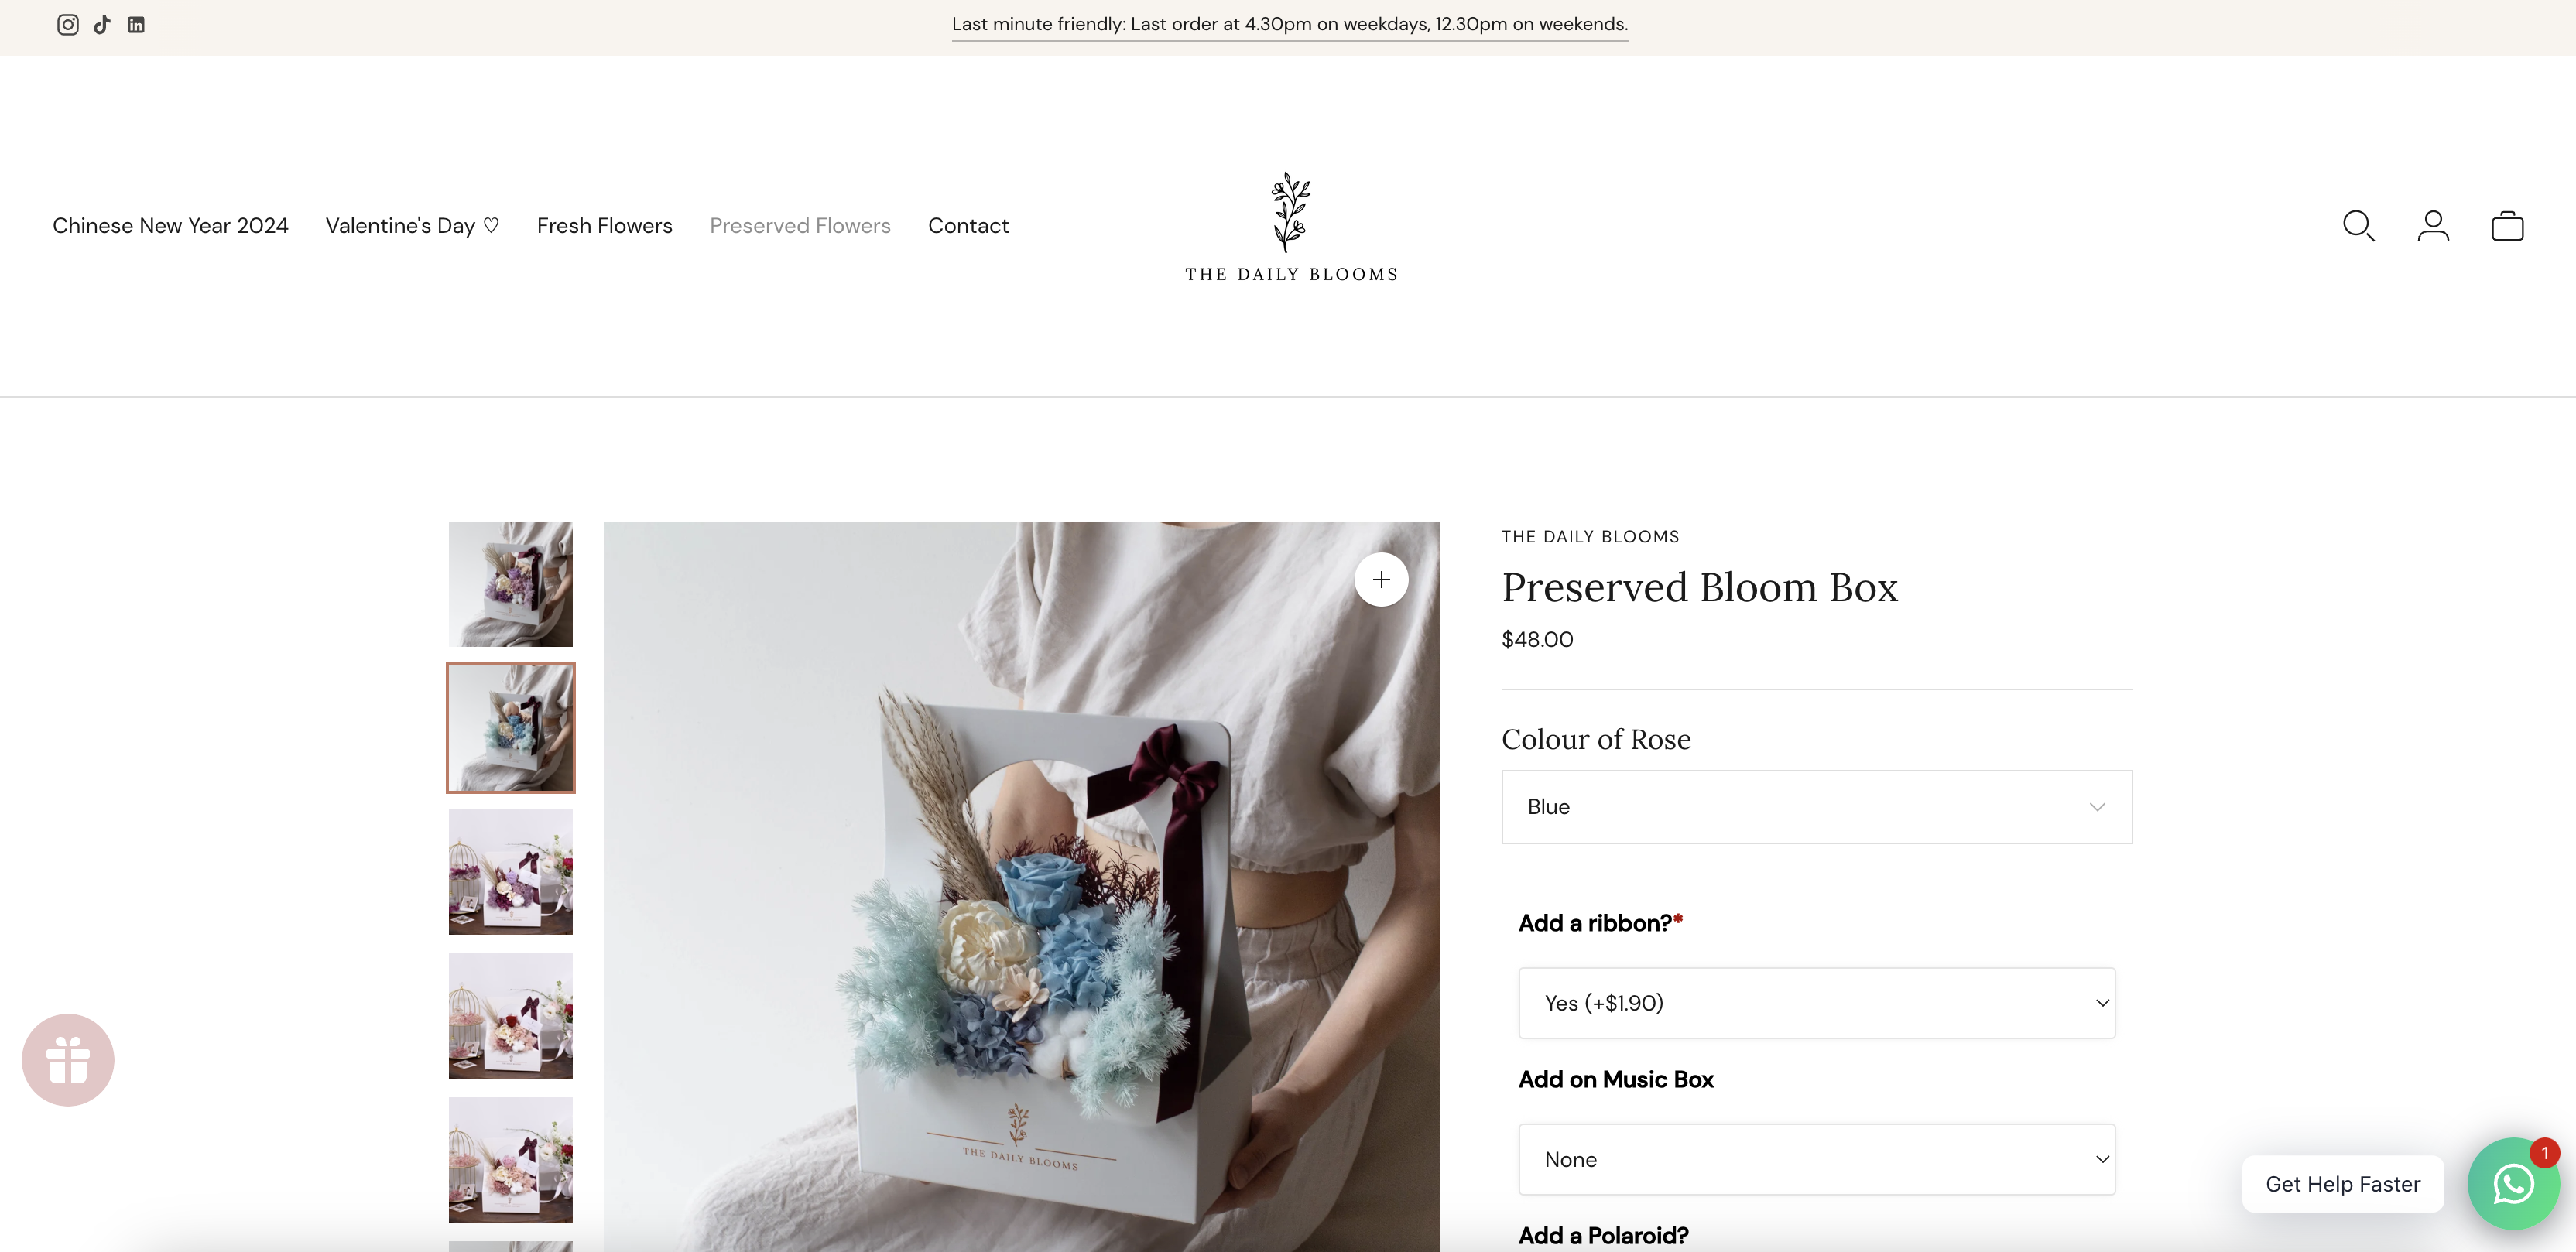 Preserved Bloom Box